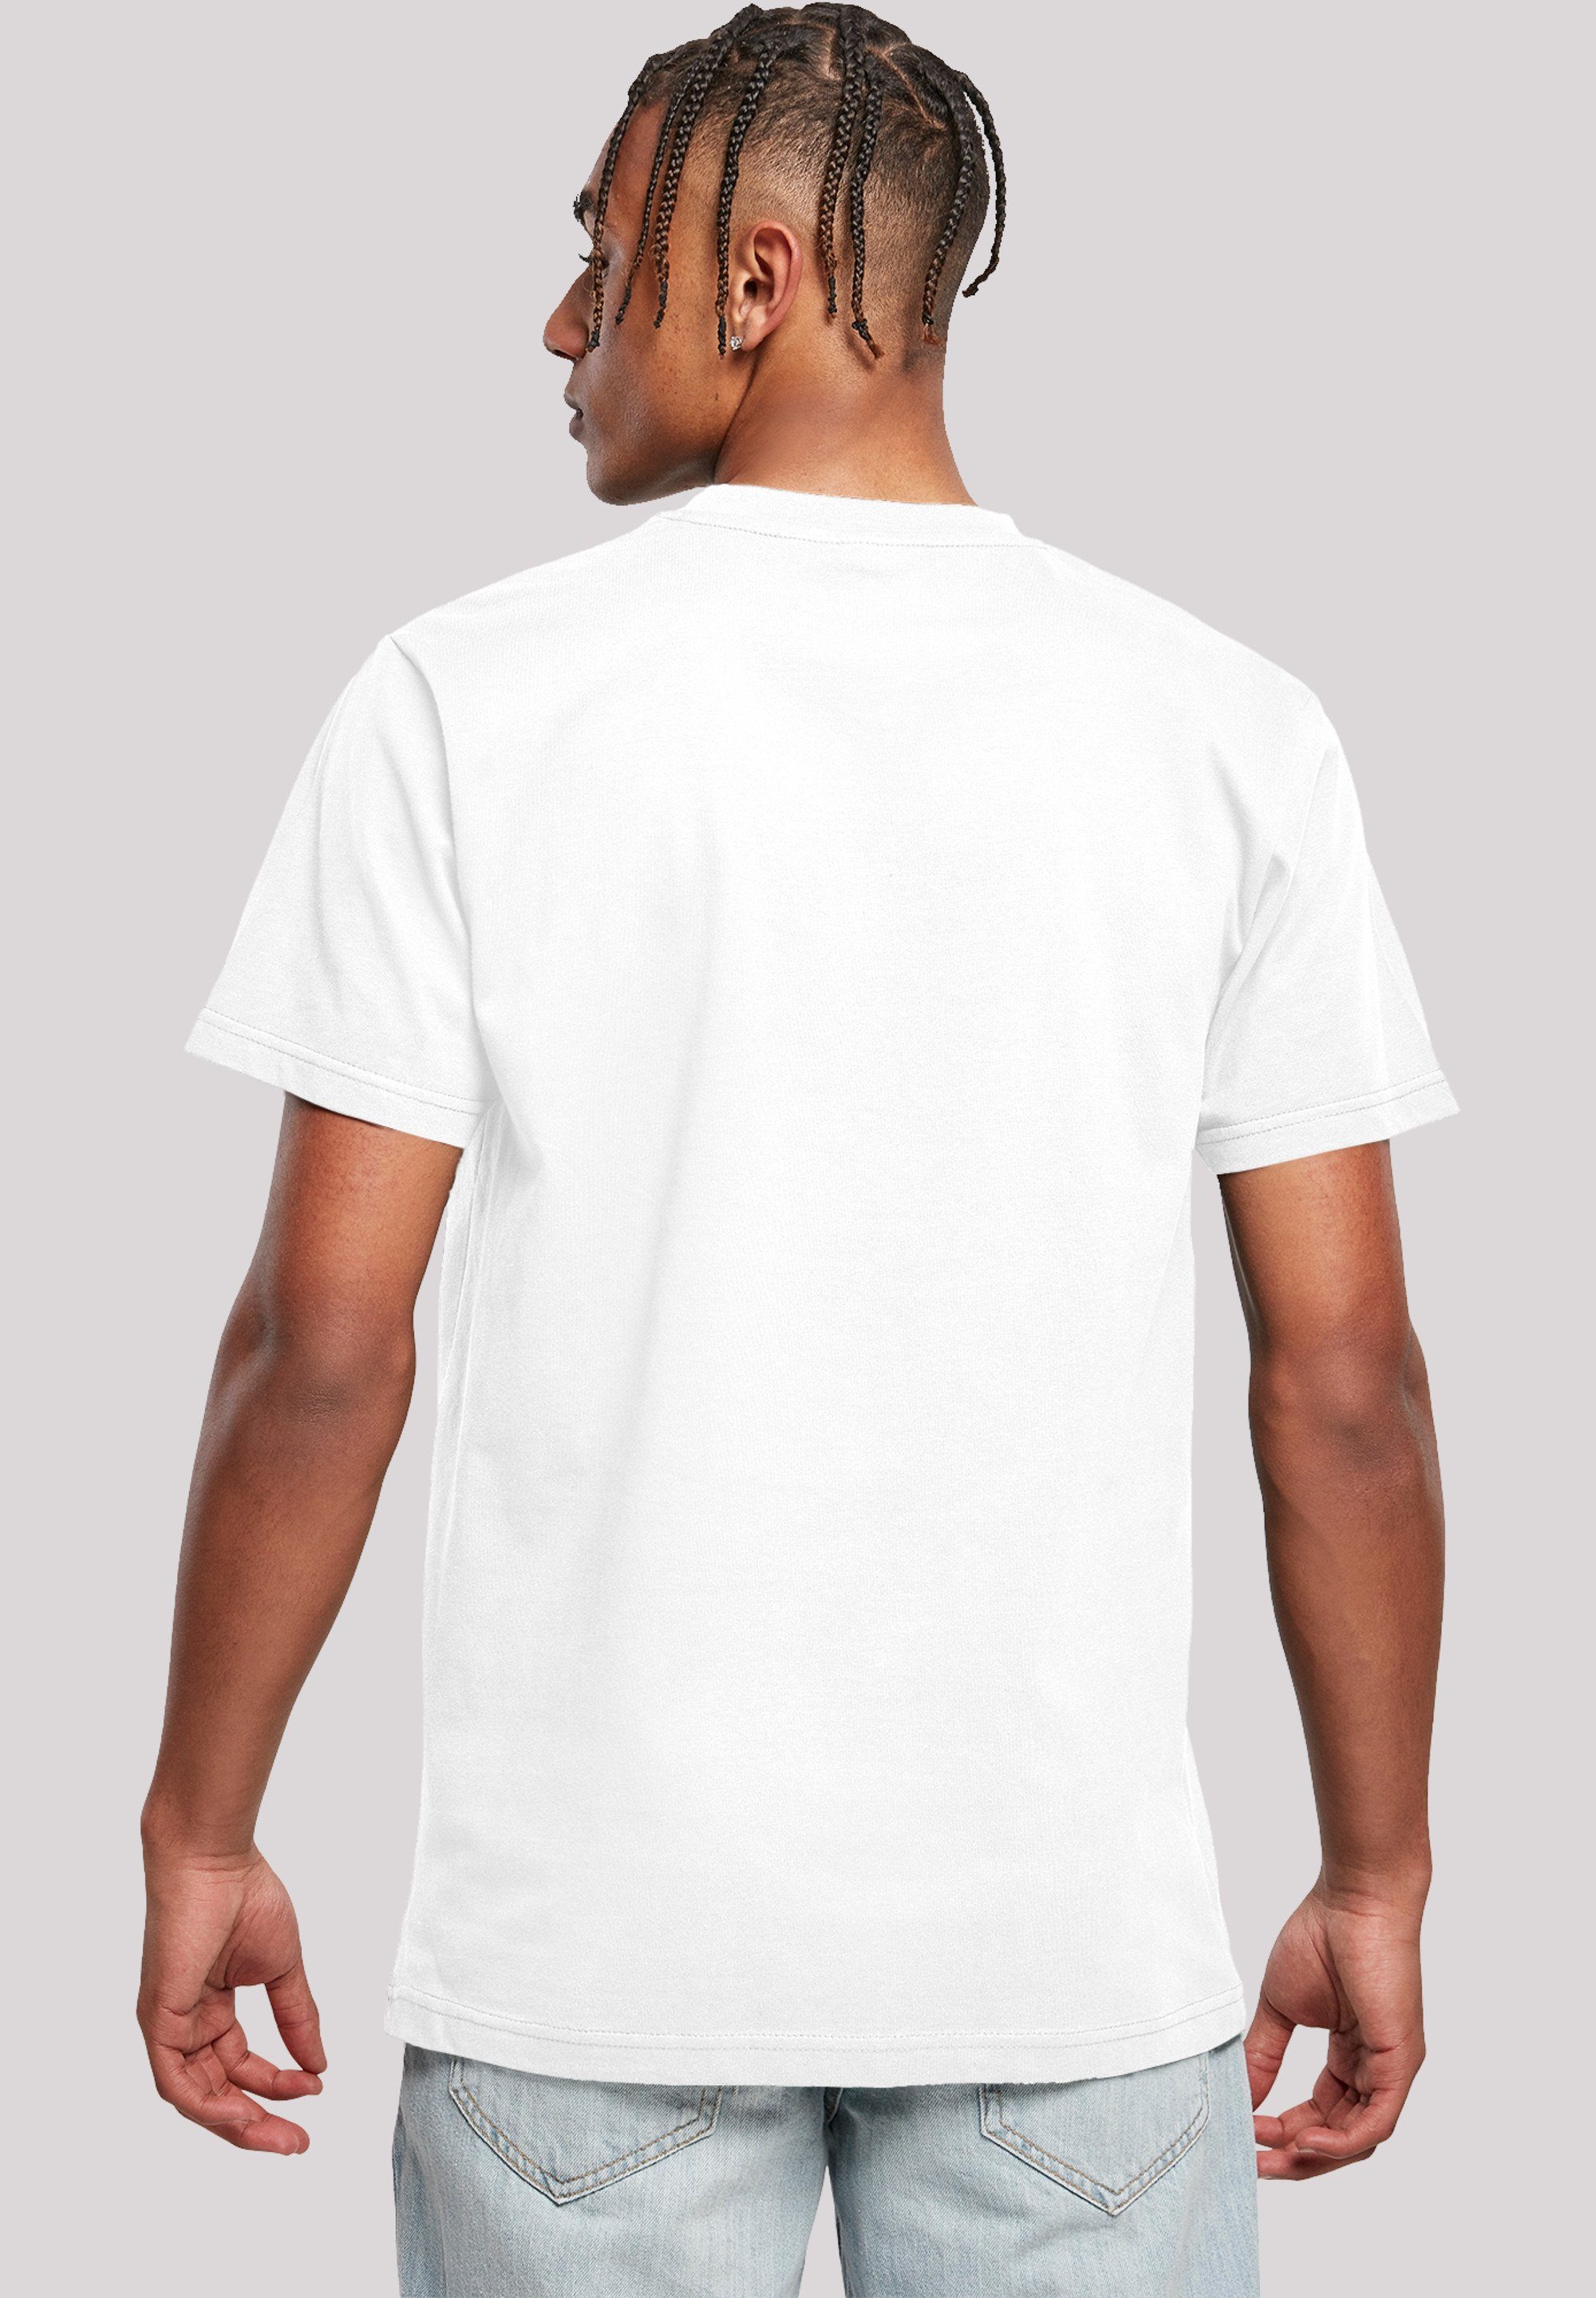 F4NT4STIC T-Shirt Classic Disney Merch,Regular-Fit,Basic,Bedruckt The Pooh Herren,Premium Winnie weiß